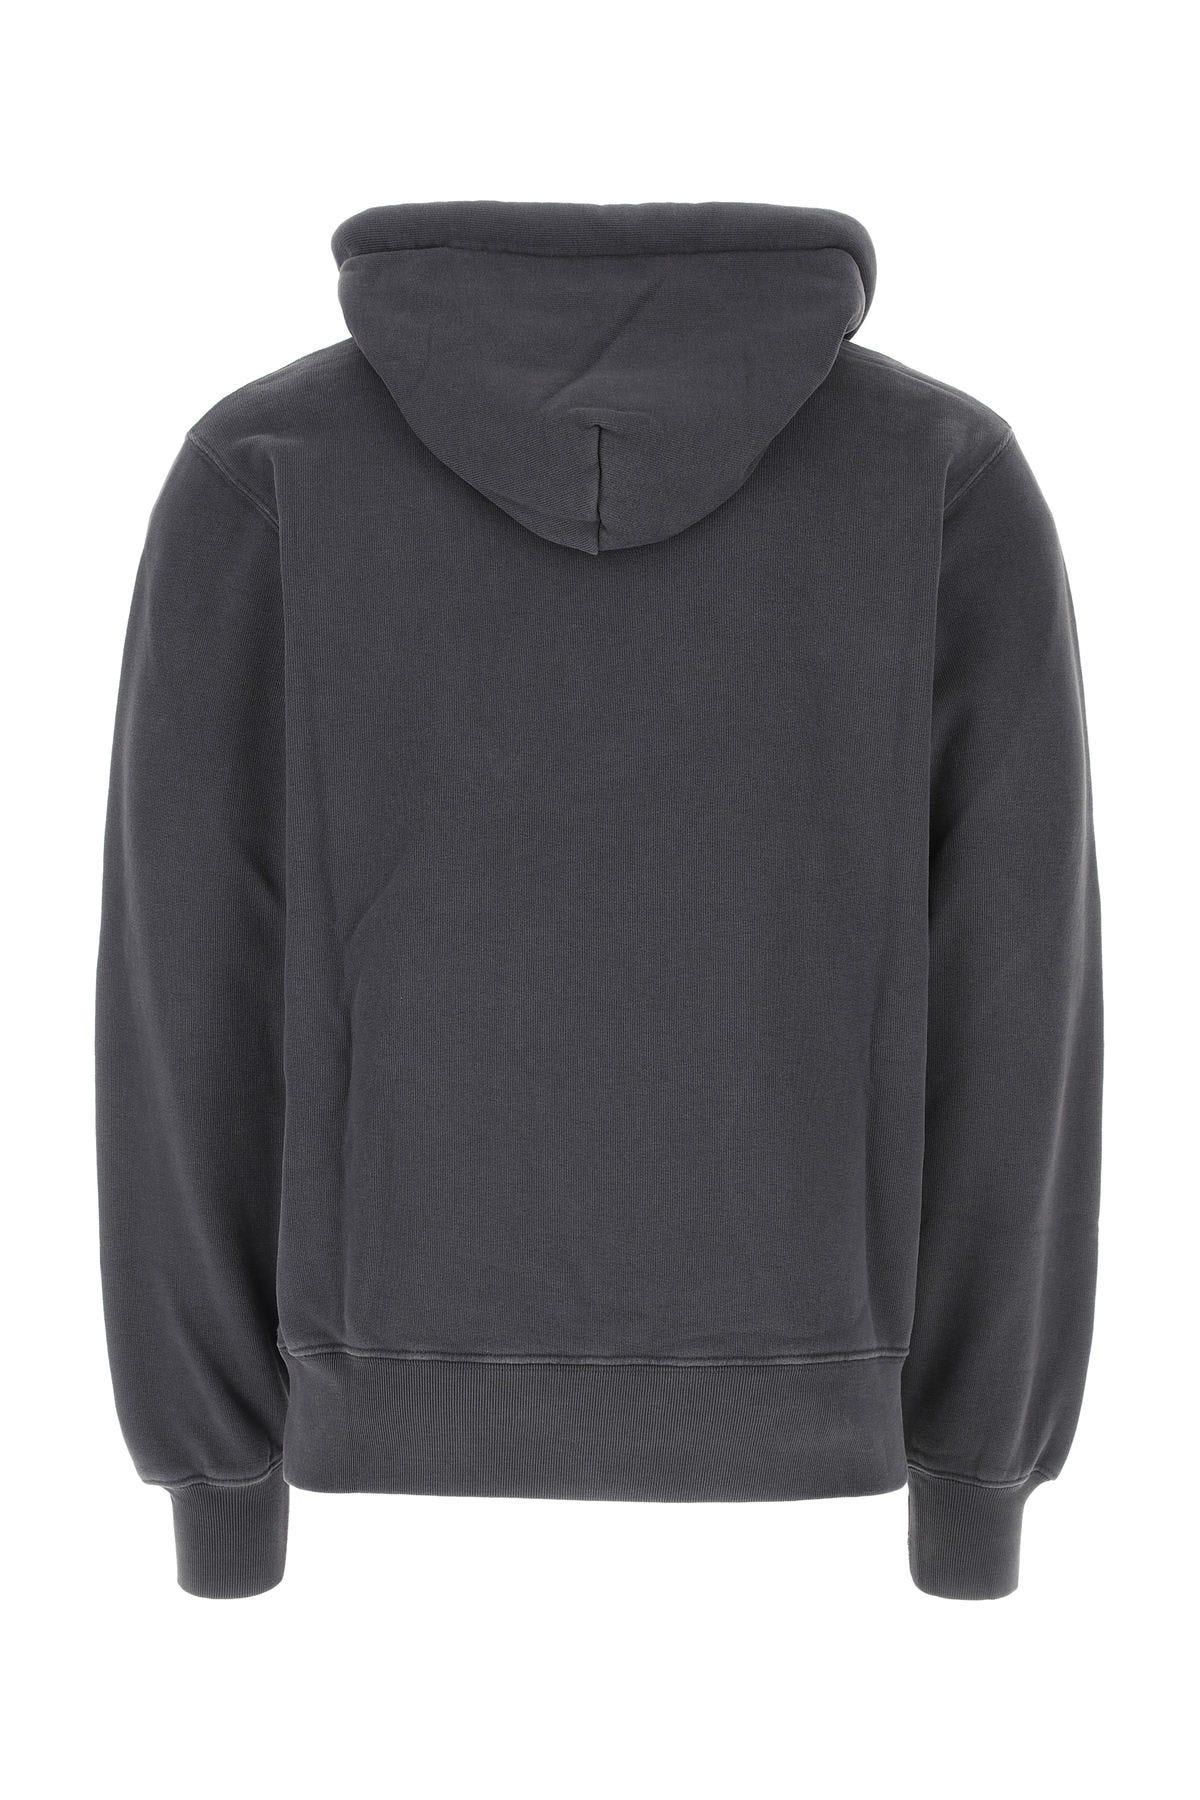 Shop Ambush Charcoal Cotton Sweatshirt In Grey